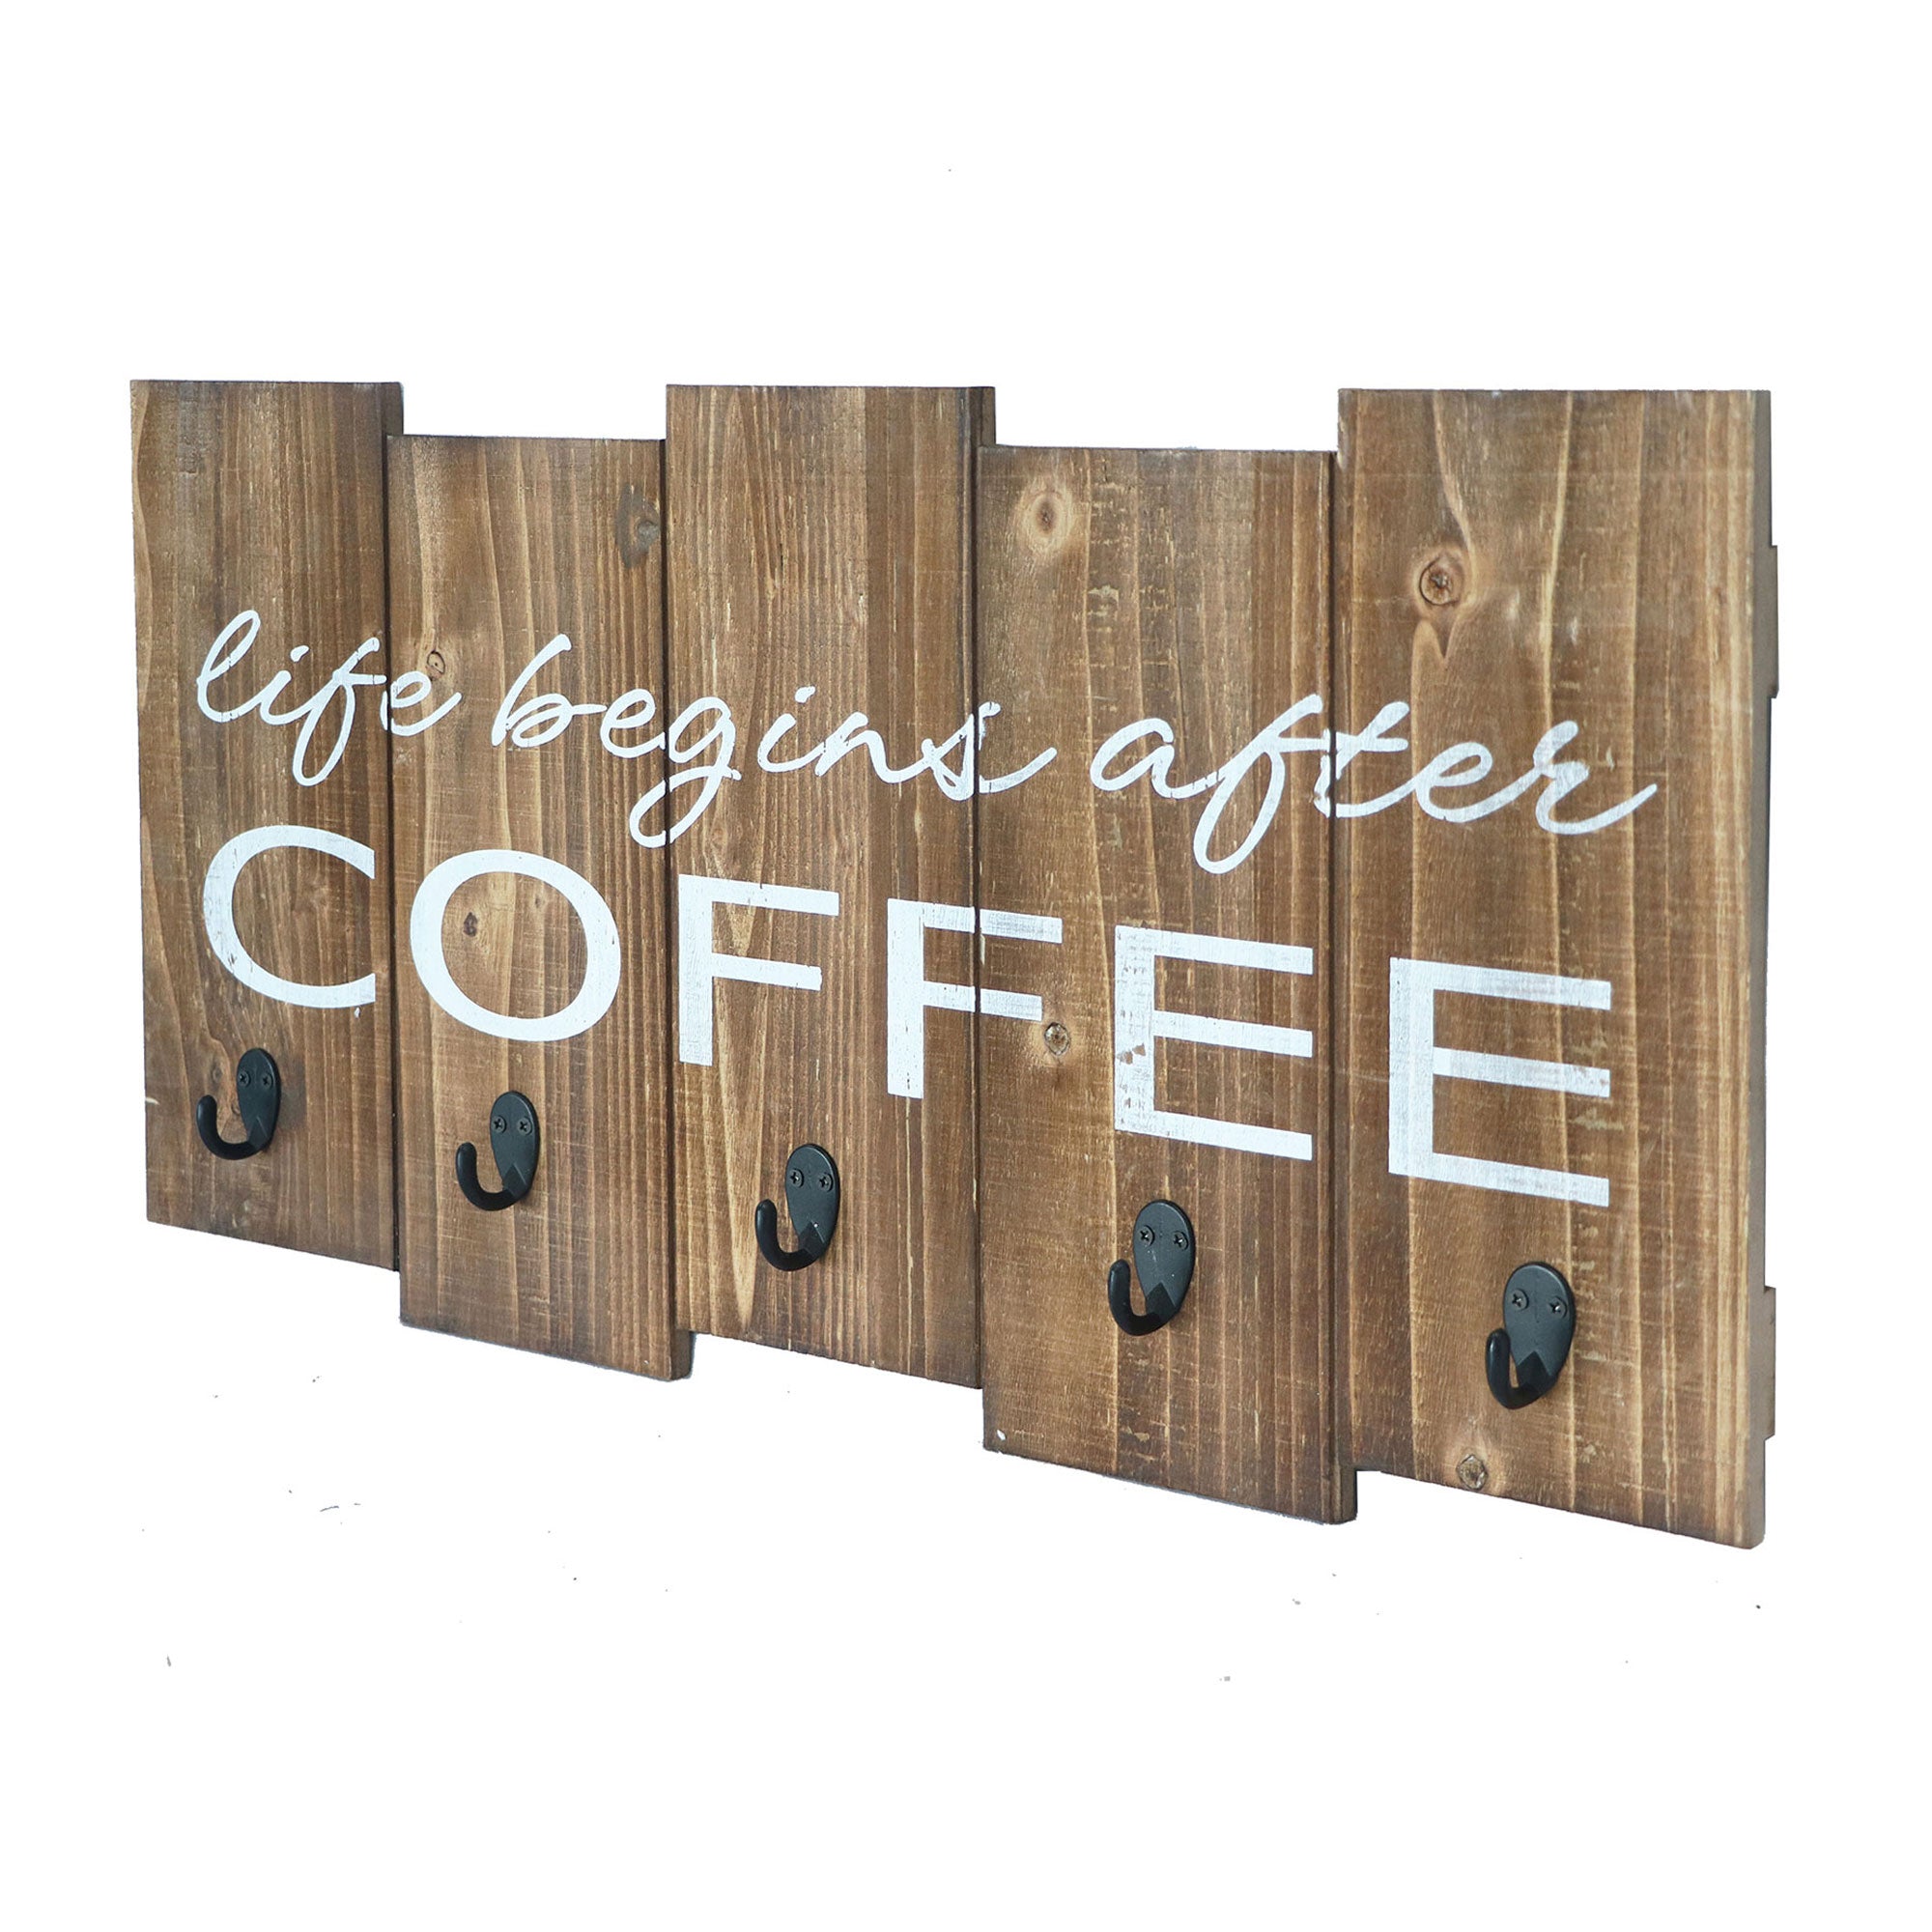 Coffee Decor Kitchen Wall Decor Coffee Bar Mug Cup Rack Holder